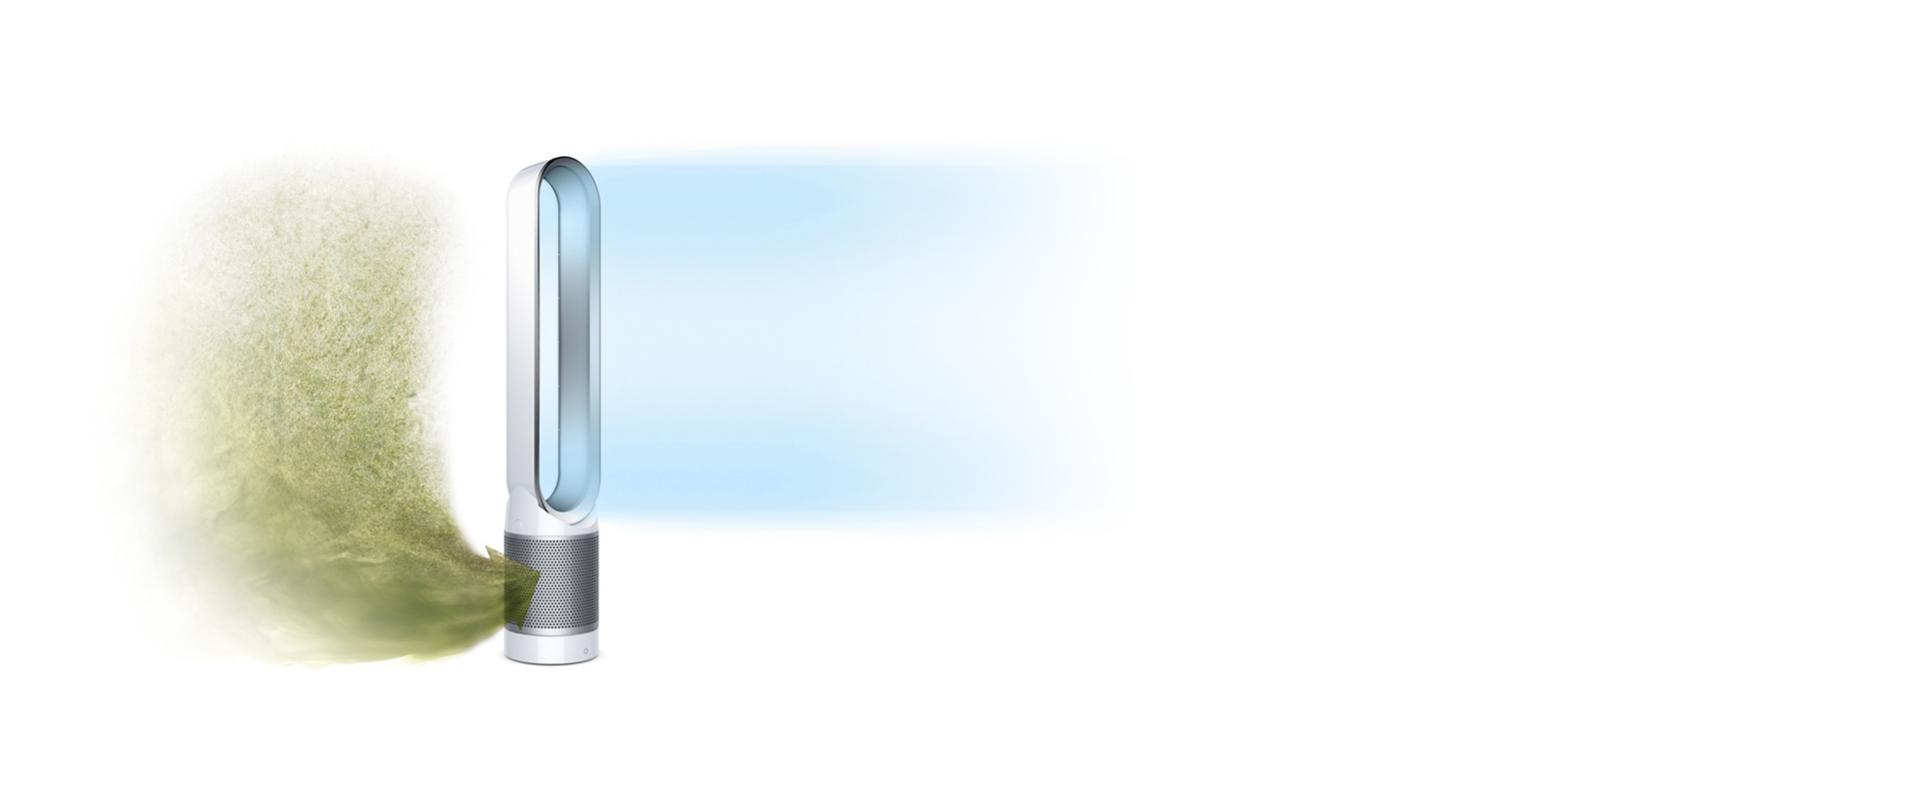 Dyson Pure Cool™ air purifier